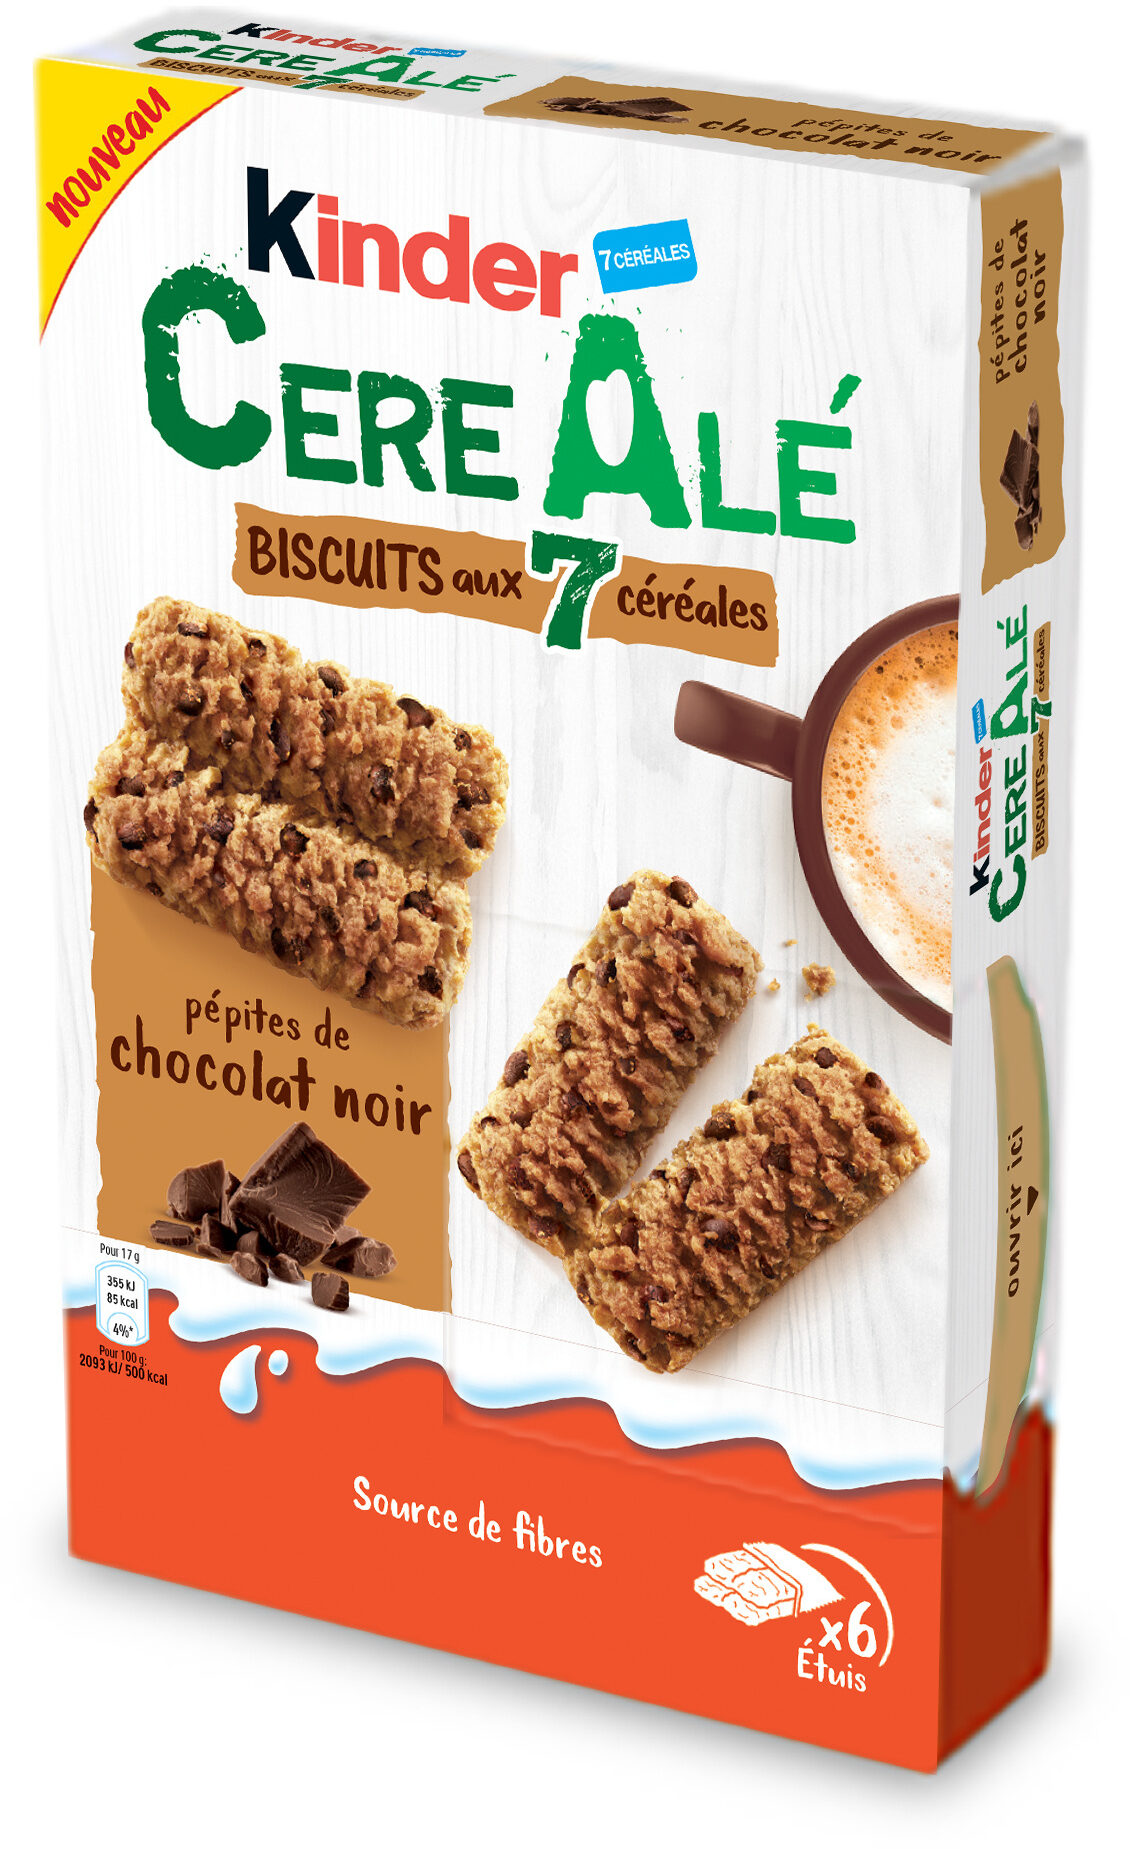 Biscuits Kinder CereAlé chocolat noir 2x6 - 204g - Prodotto - fr